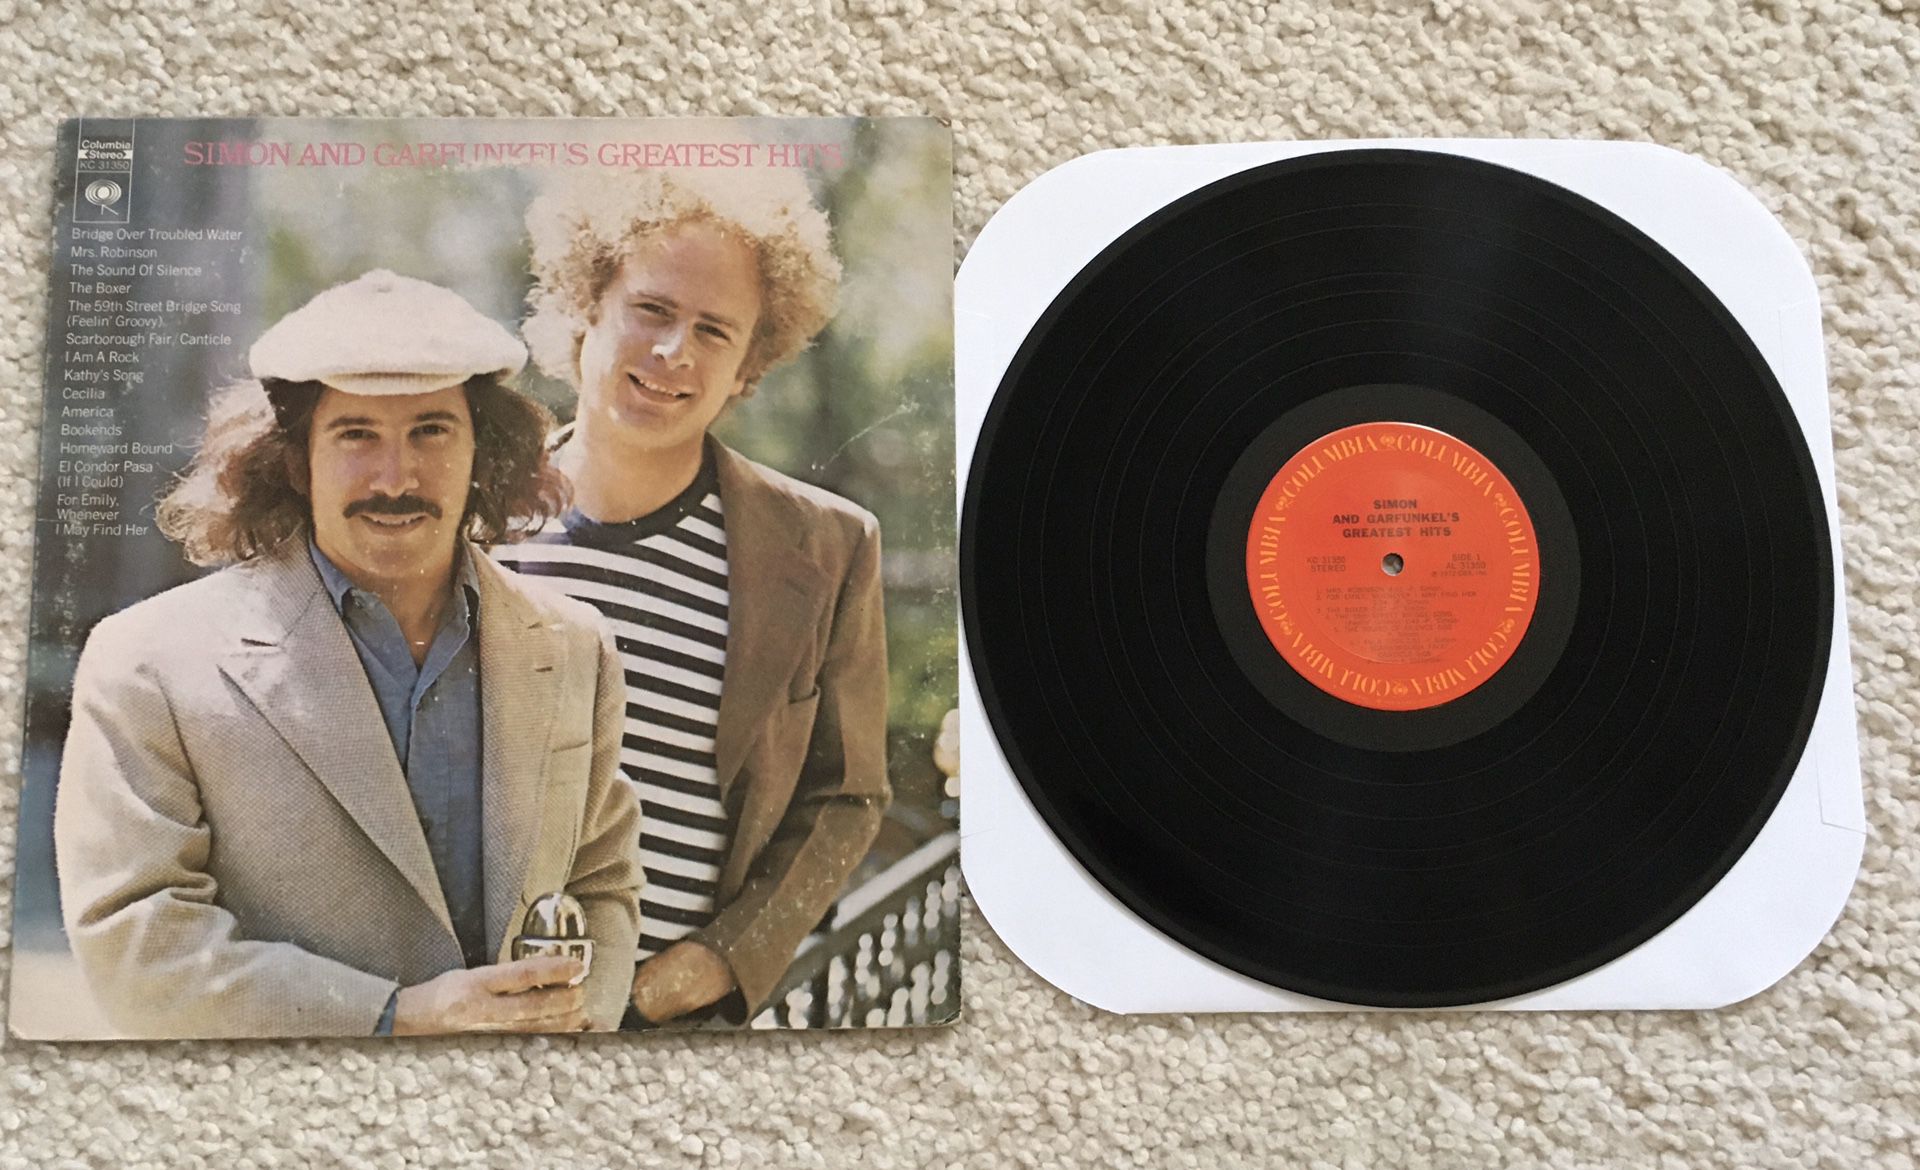 Simon & Garfunkel “Simon and Garfunkel’s Greatest Hits” vinyl lp 1972 Columbia Records Original Pressing not a reissue very nice copy Rock